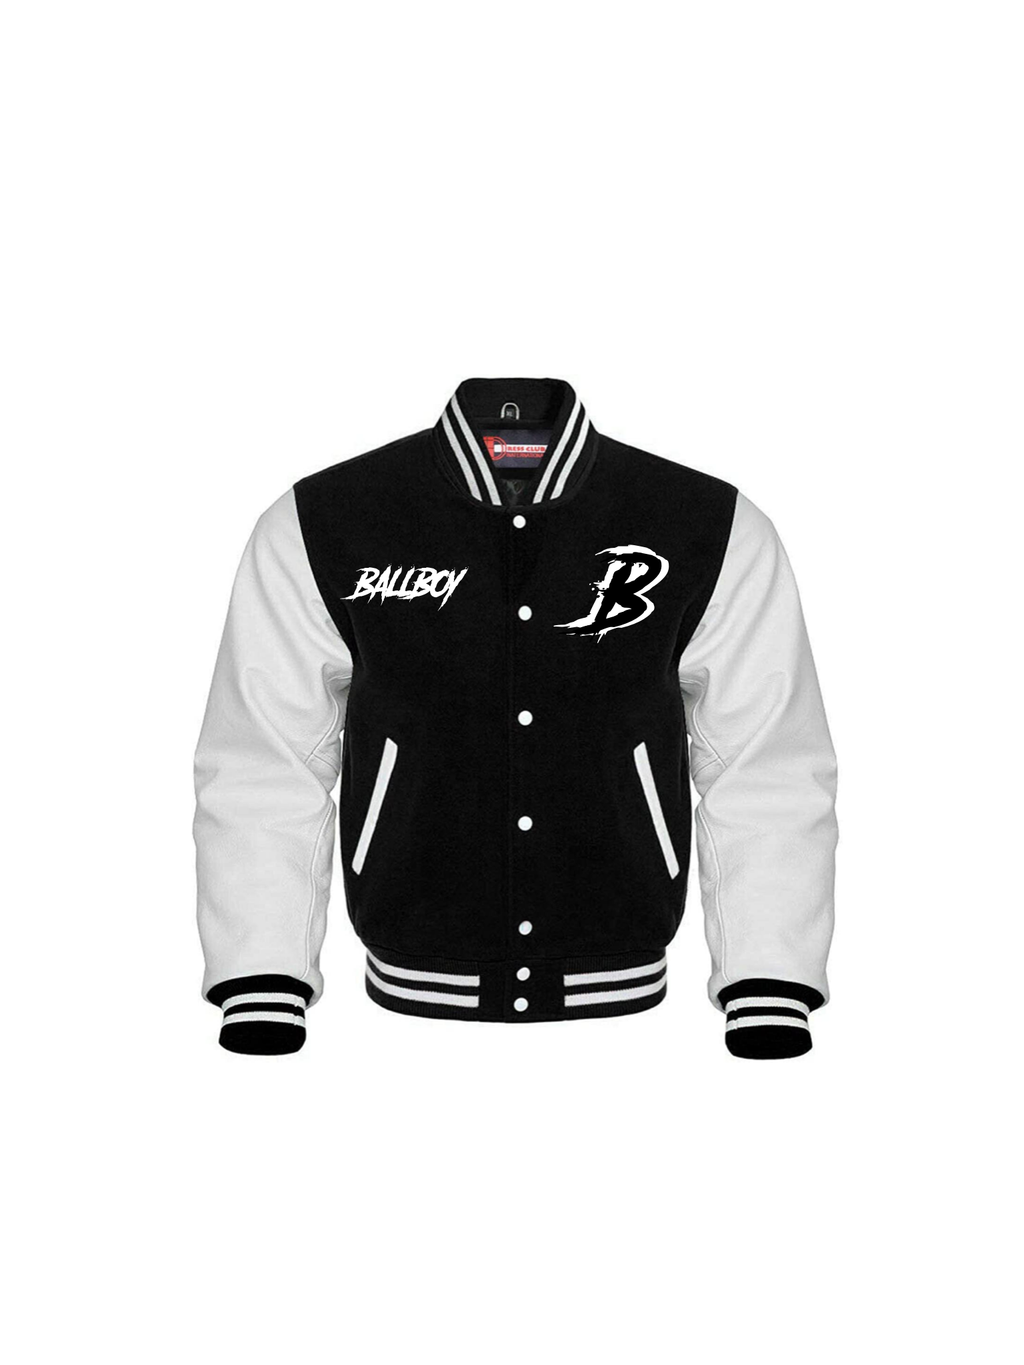 Ballboy Elite “Elevated” Varsity Jacket